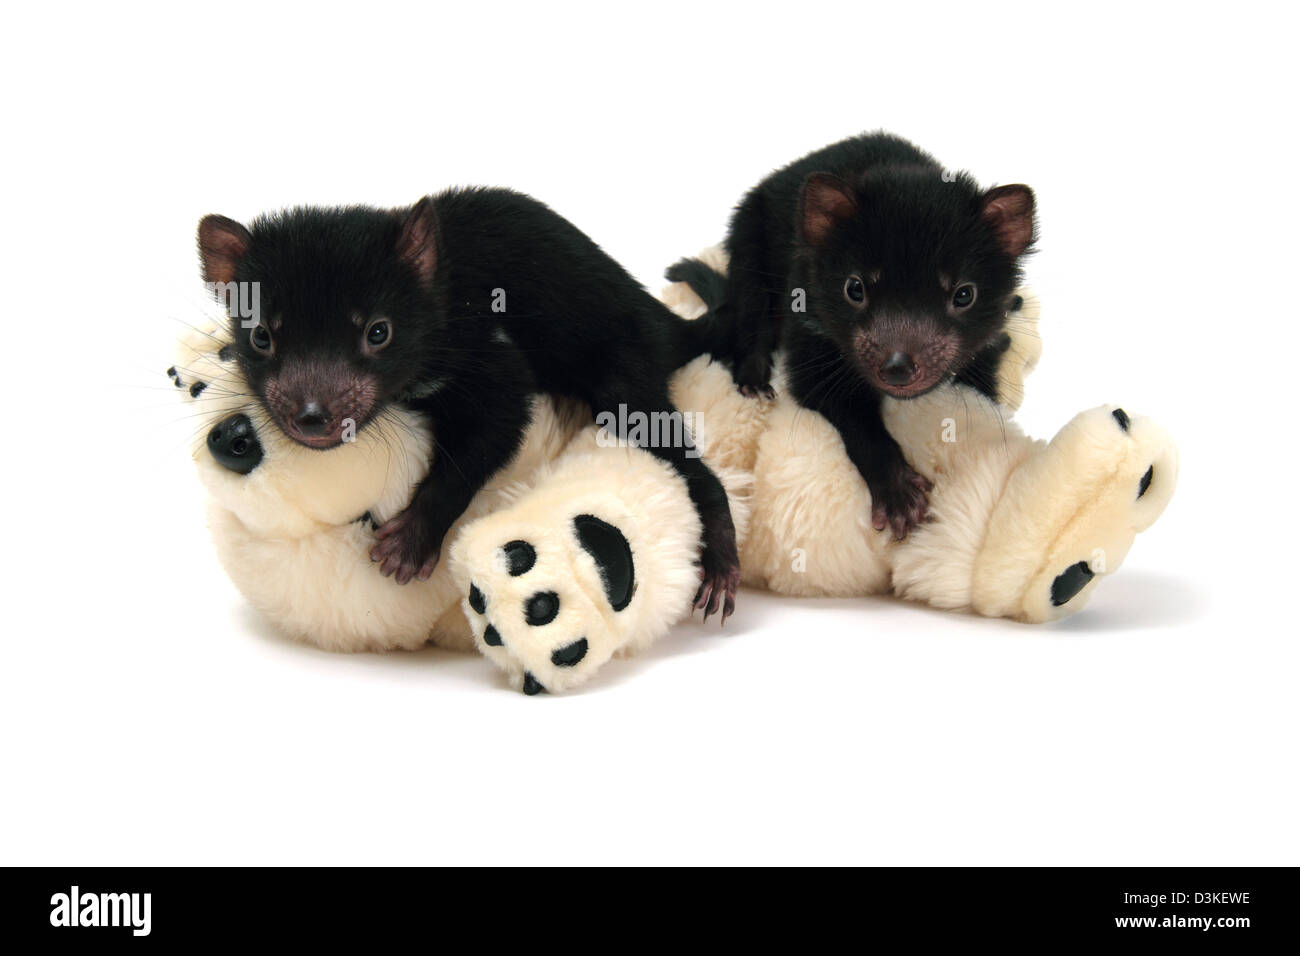 Two Tasmanian devil joeys on a stuffed toy Stock Photo